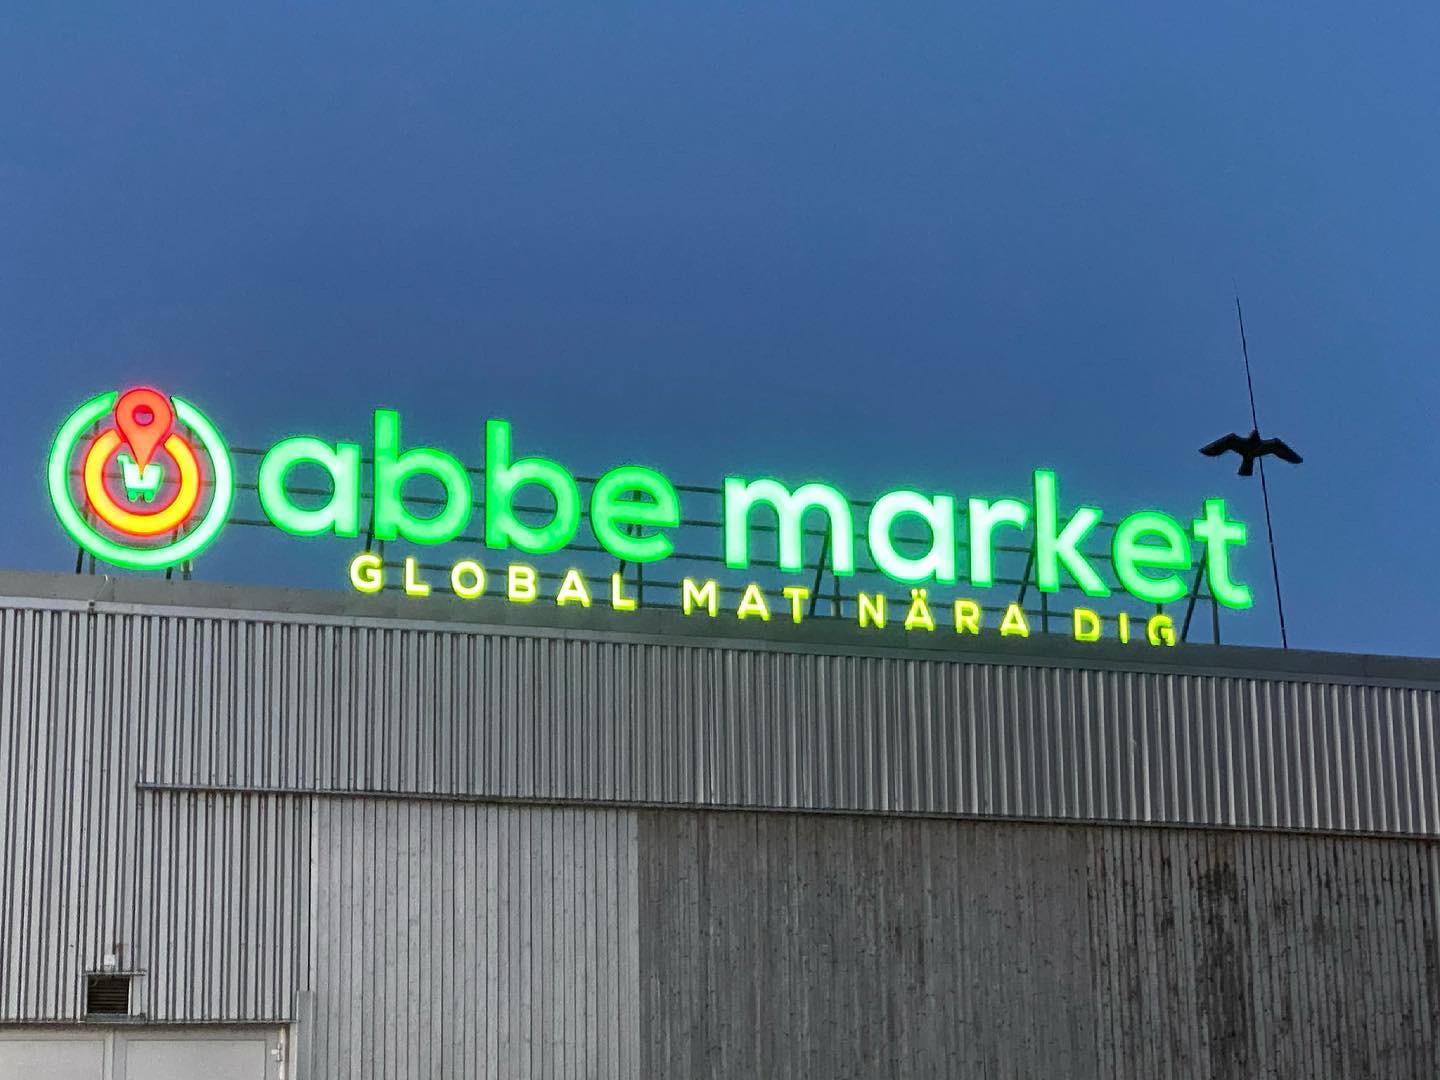 Abbe Market 2